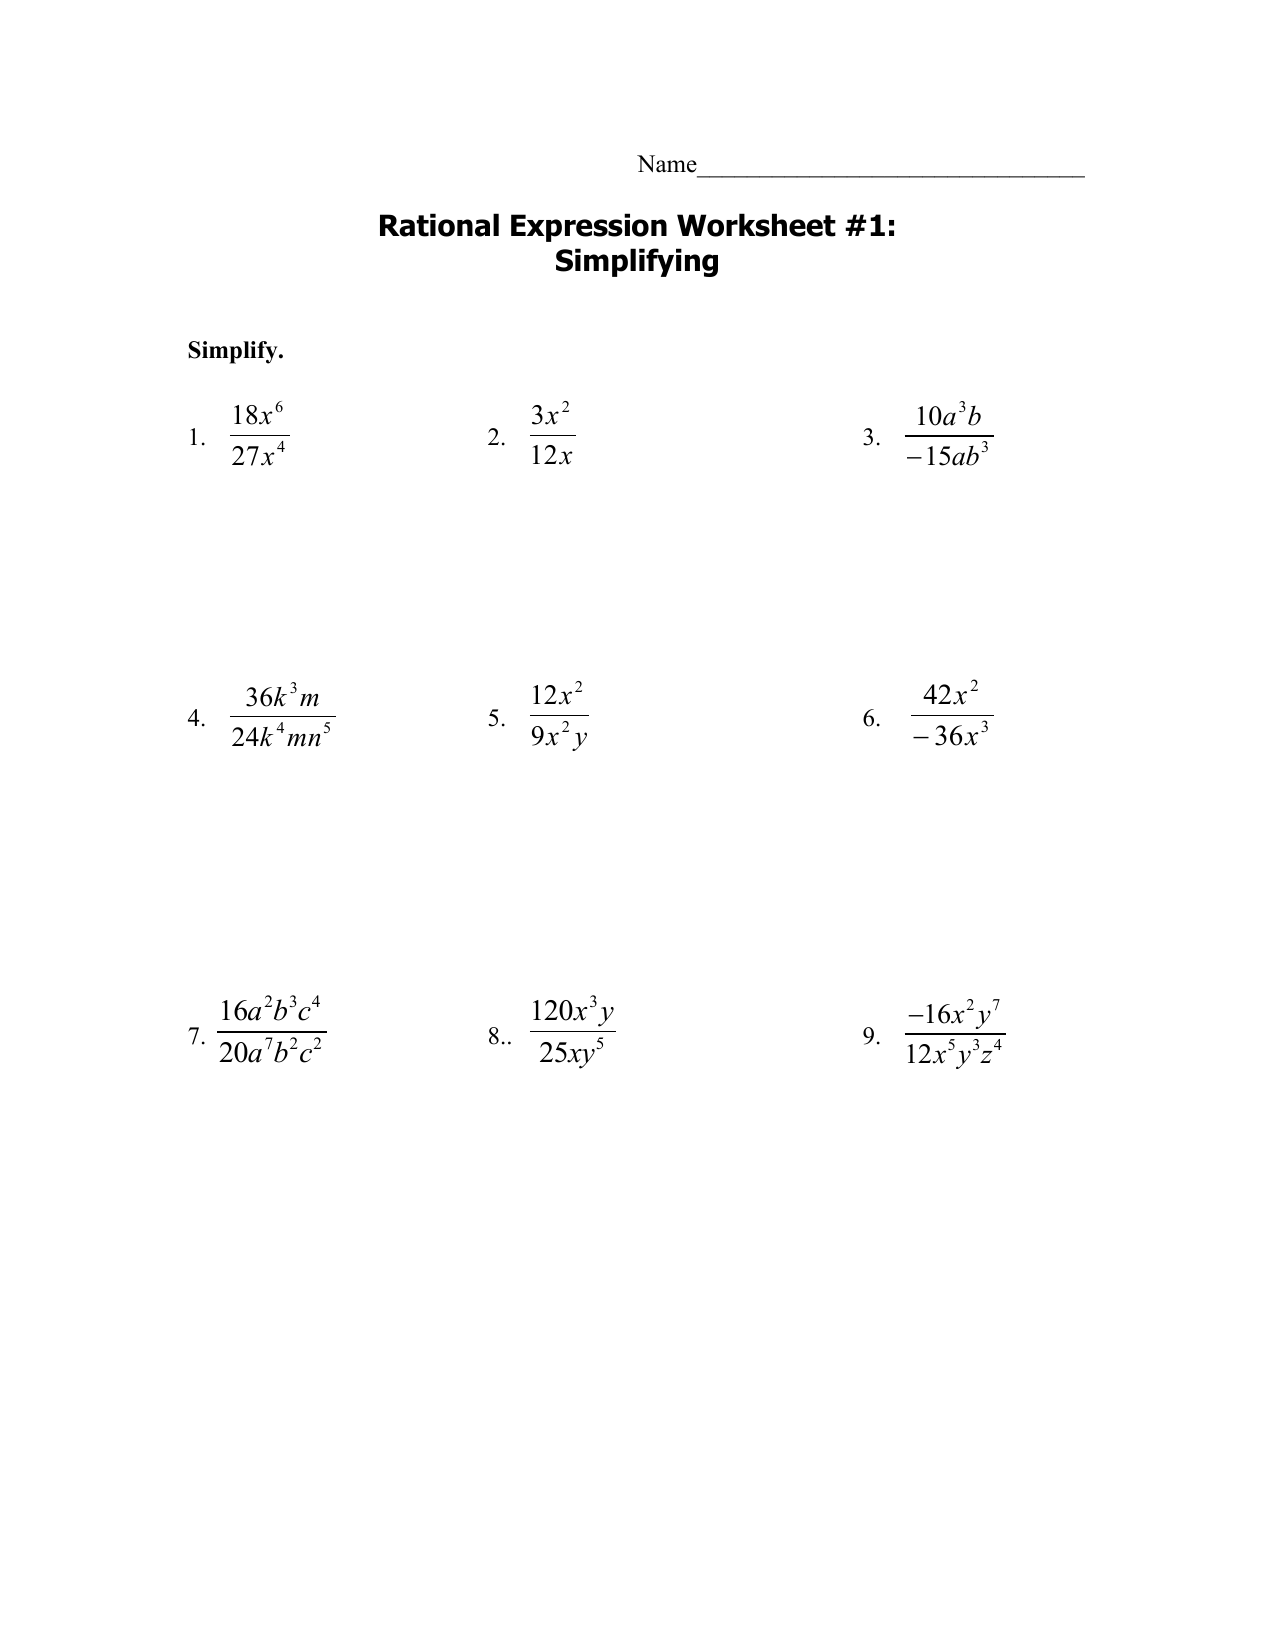 M20 rationalworksheets20-205 20 Inside Simplifying Rational Expressions Worksheet